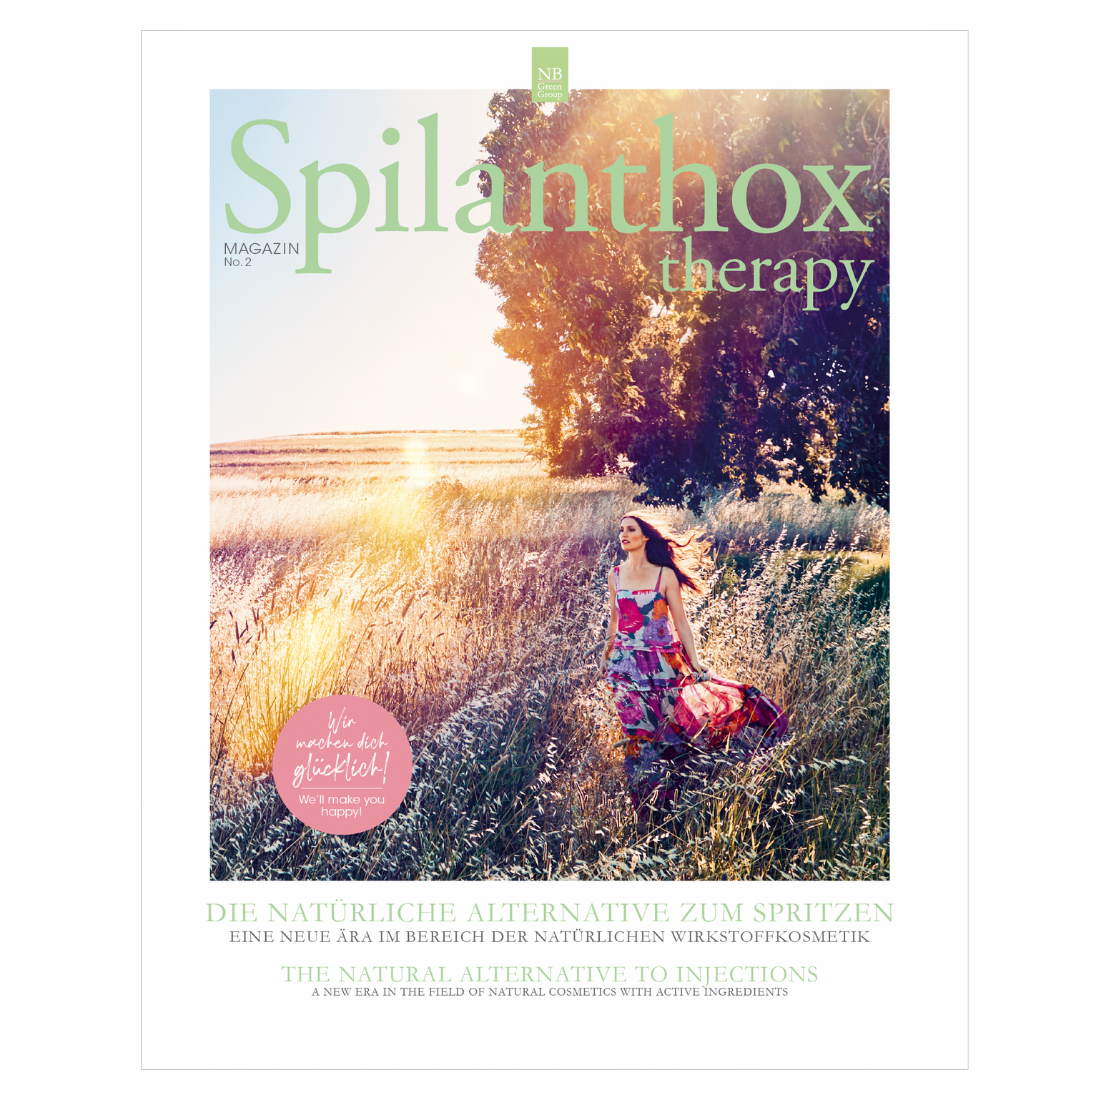 Revista Spilanthox therapy